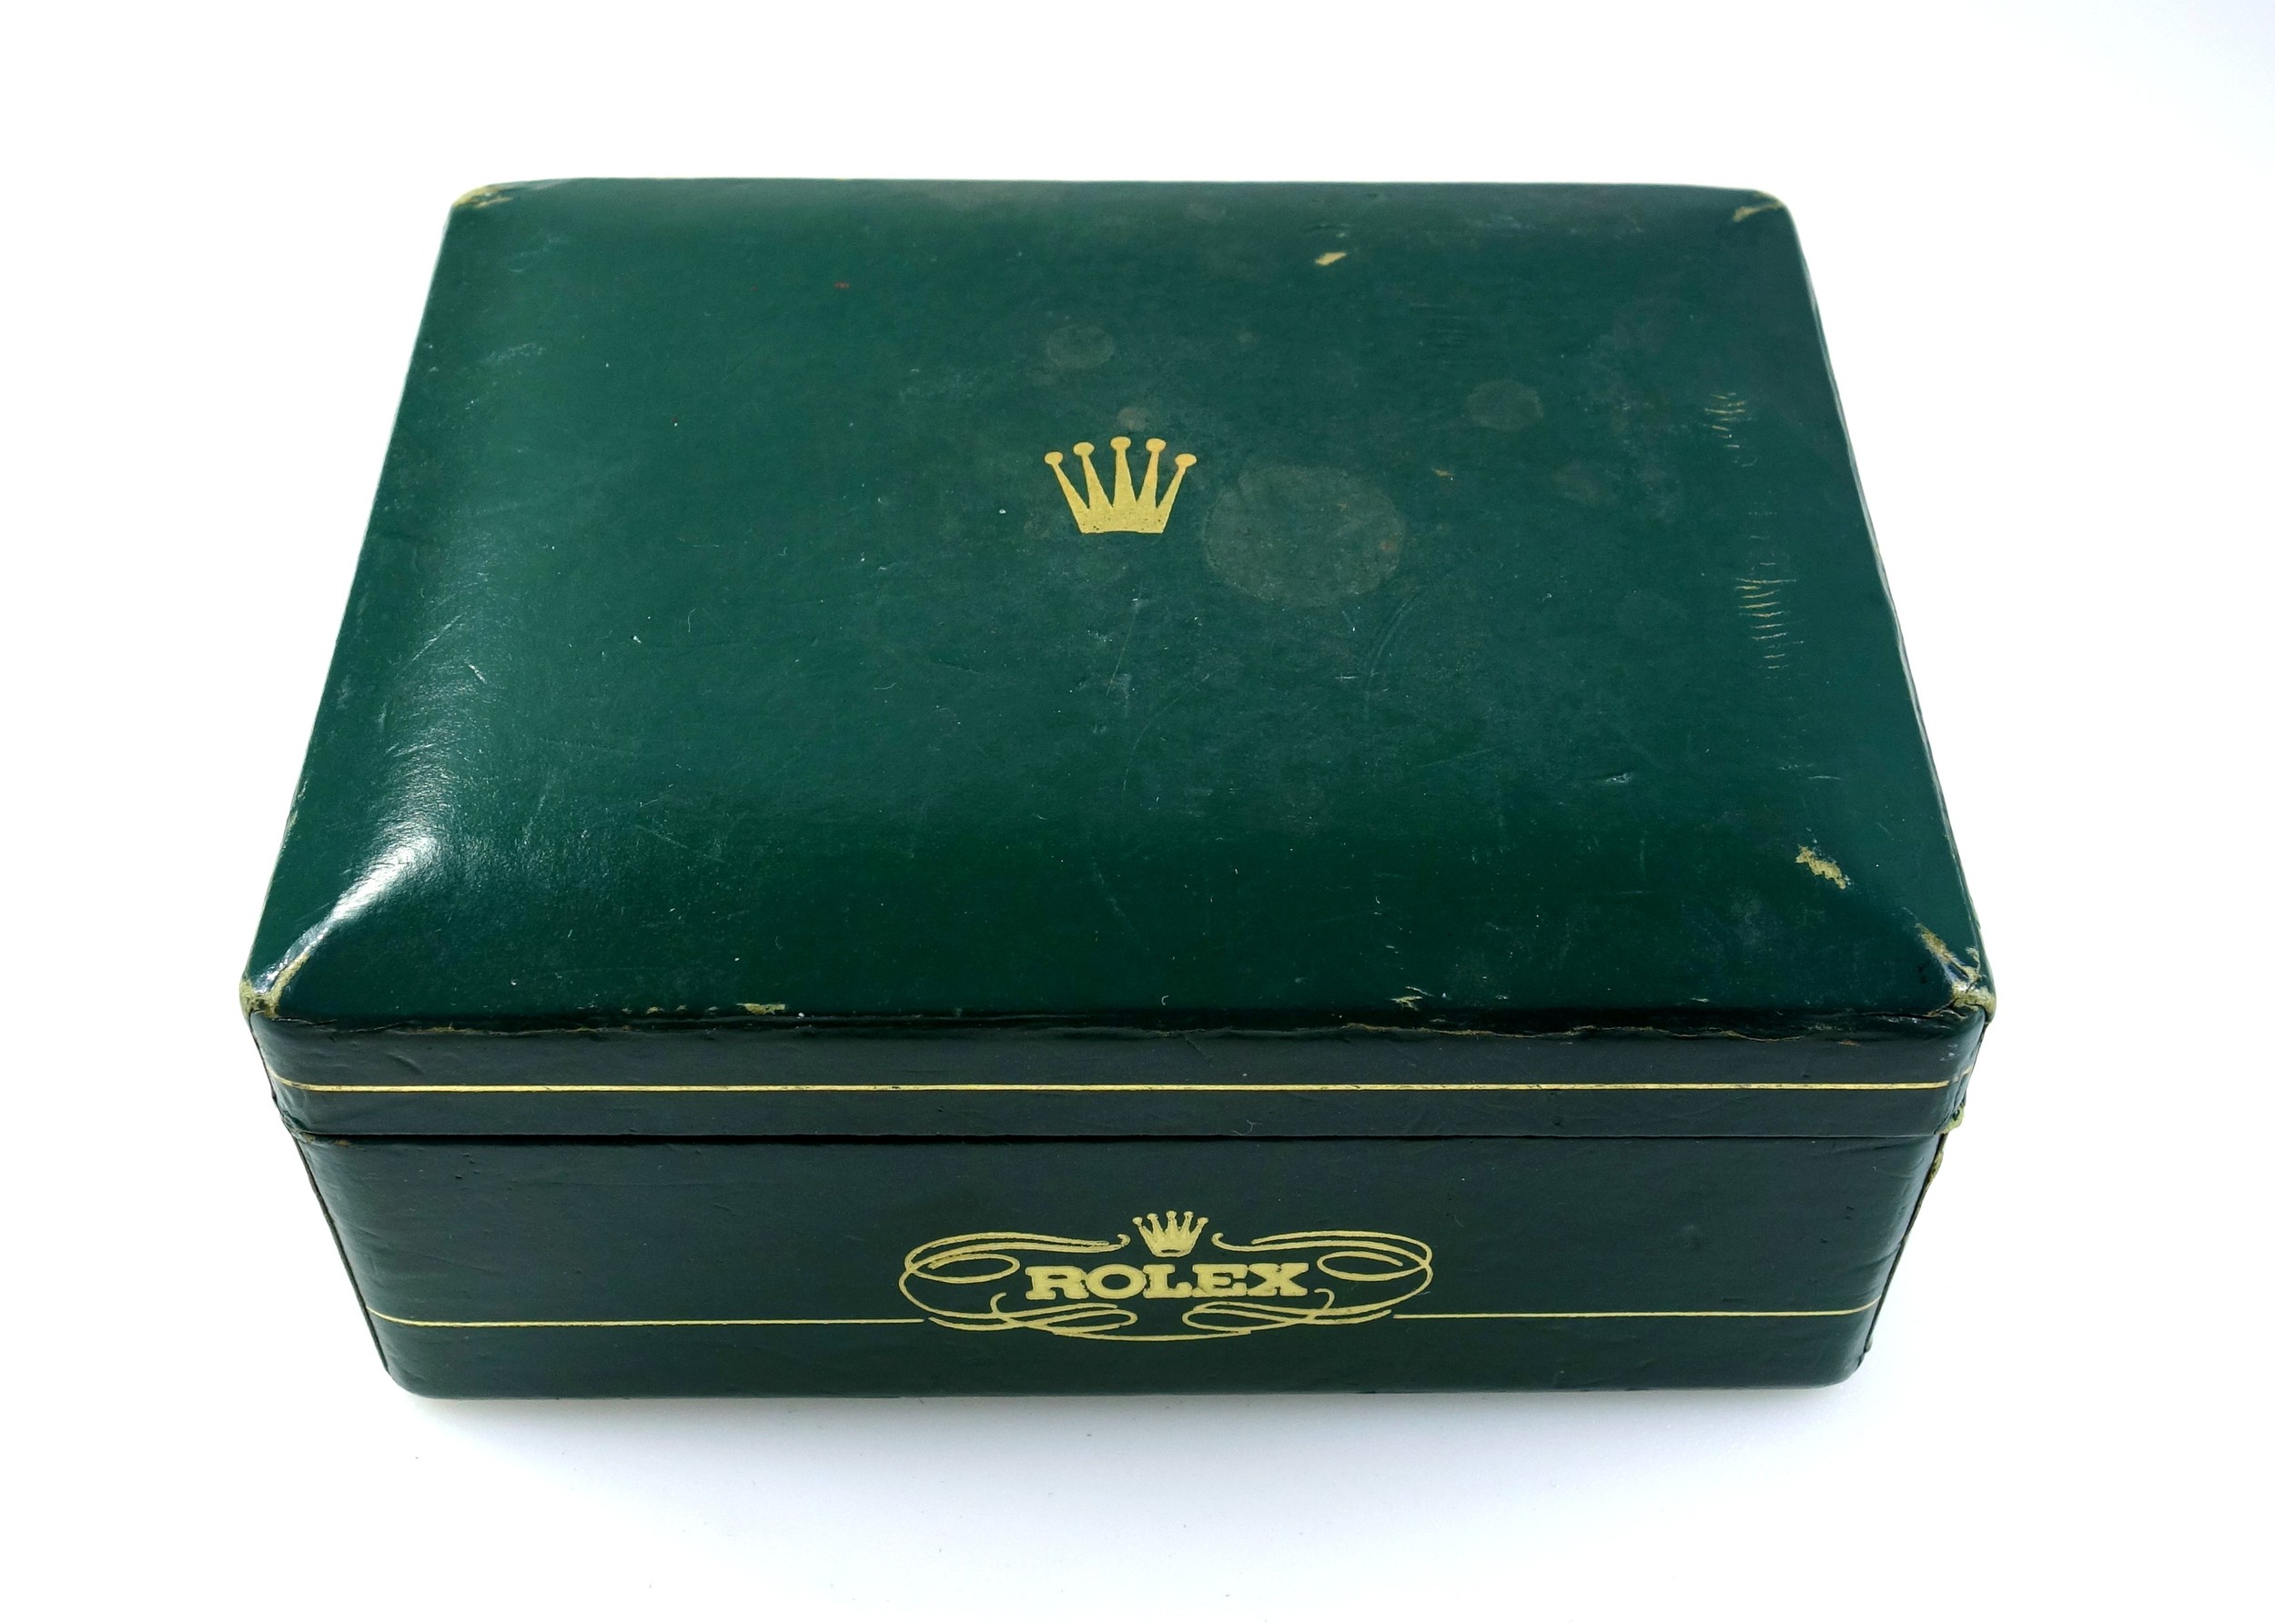 Vintage green Rolex box, circa 1960's